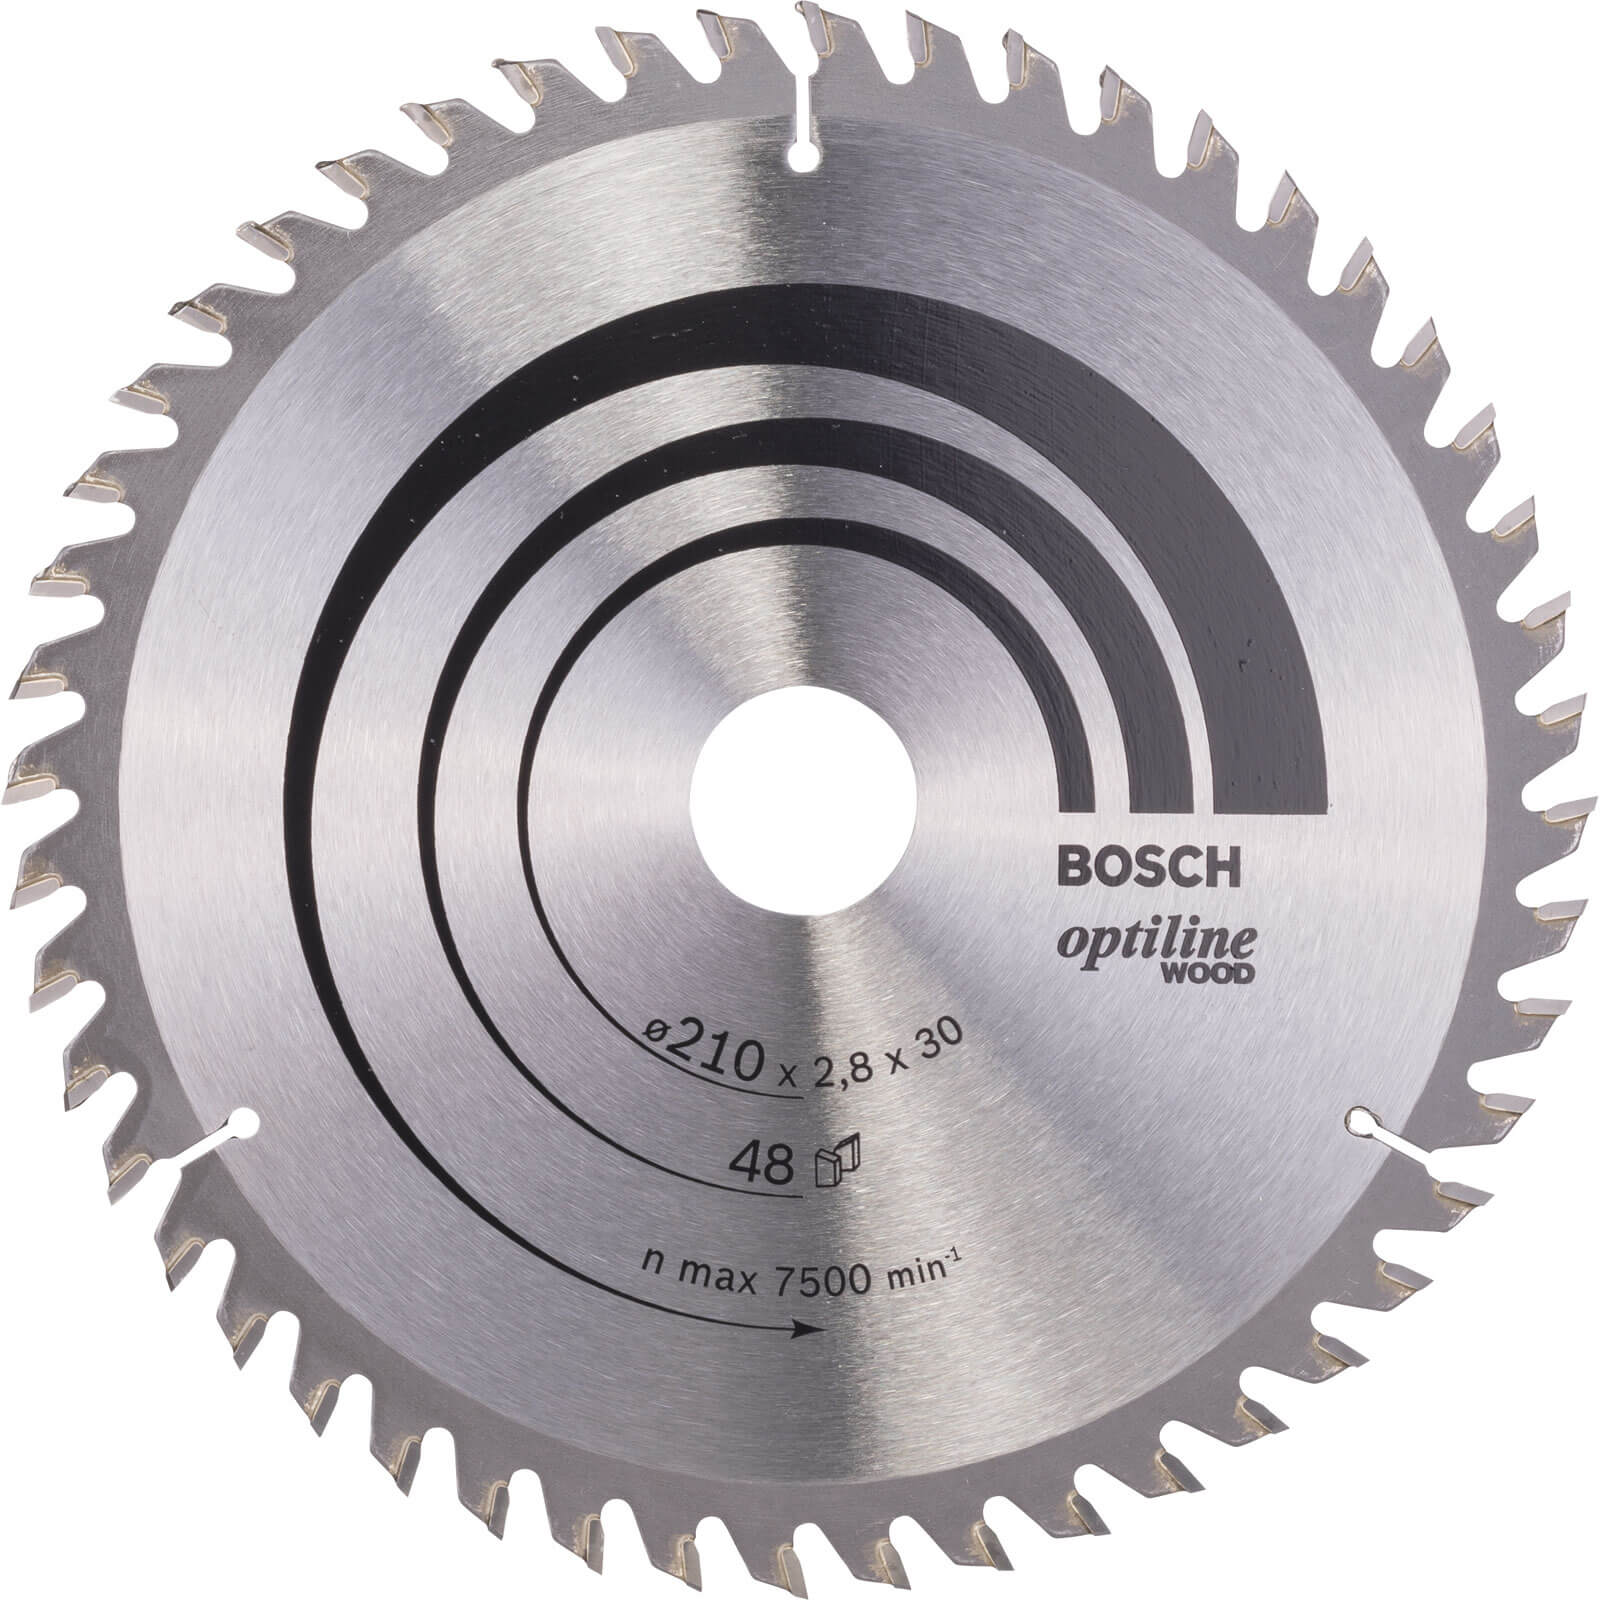 Photos - Power Tool Accessory Bosch Optiline Wood Cutting Saw Blade 210mm 48T 30mm 